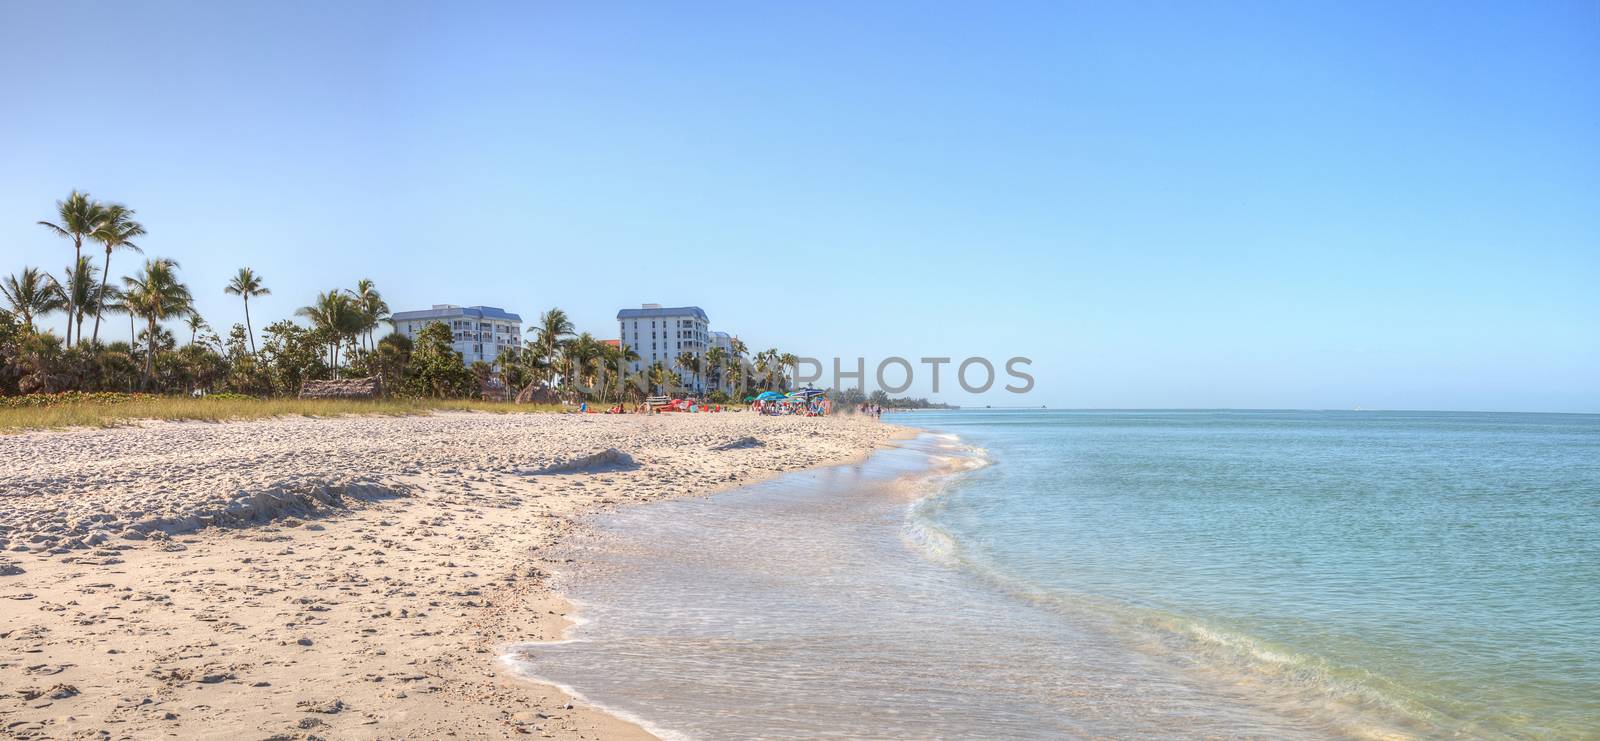 Clear blue sky over Lowdermilk Beach in Naples, Florida